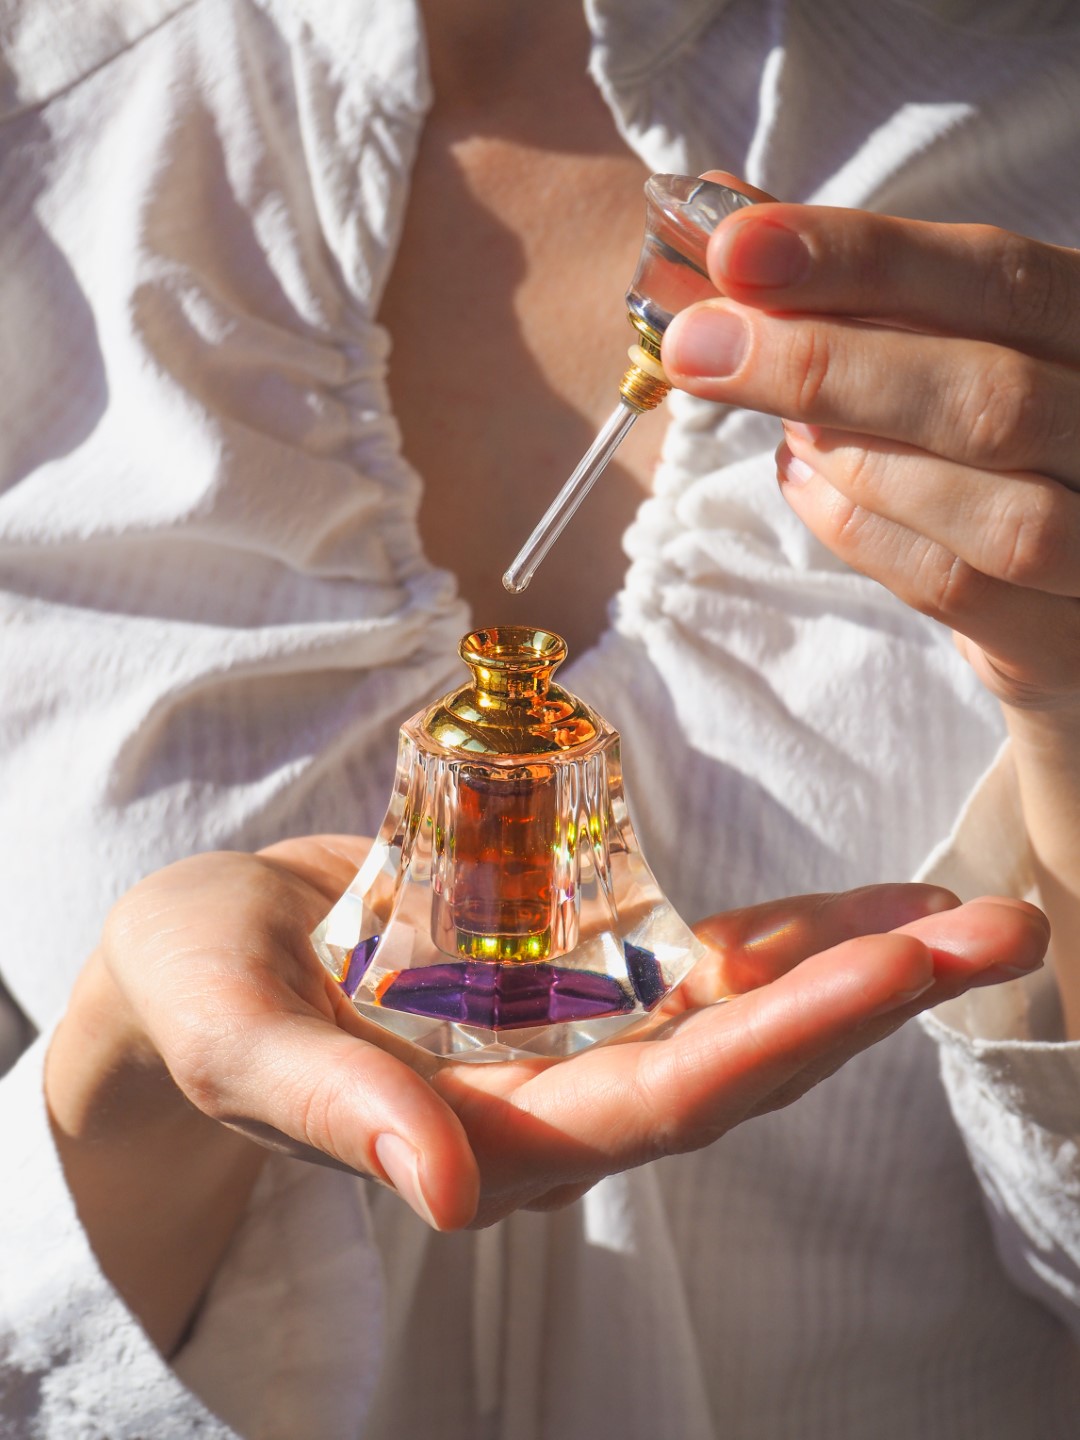 Arabian oud attar perfume or agarwood oil fragrances in crystal bottle.